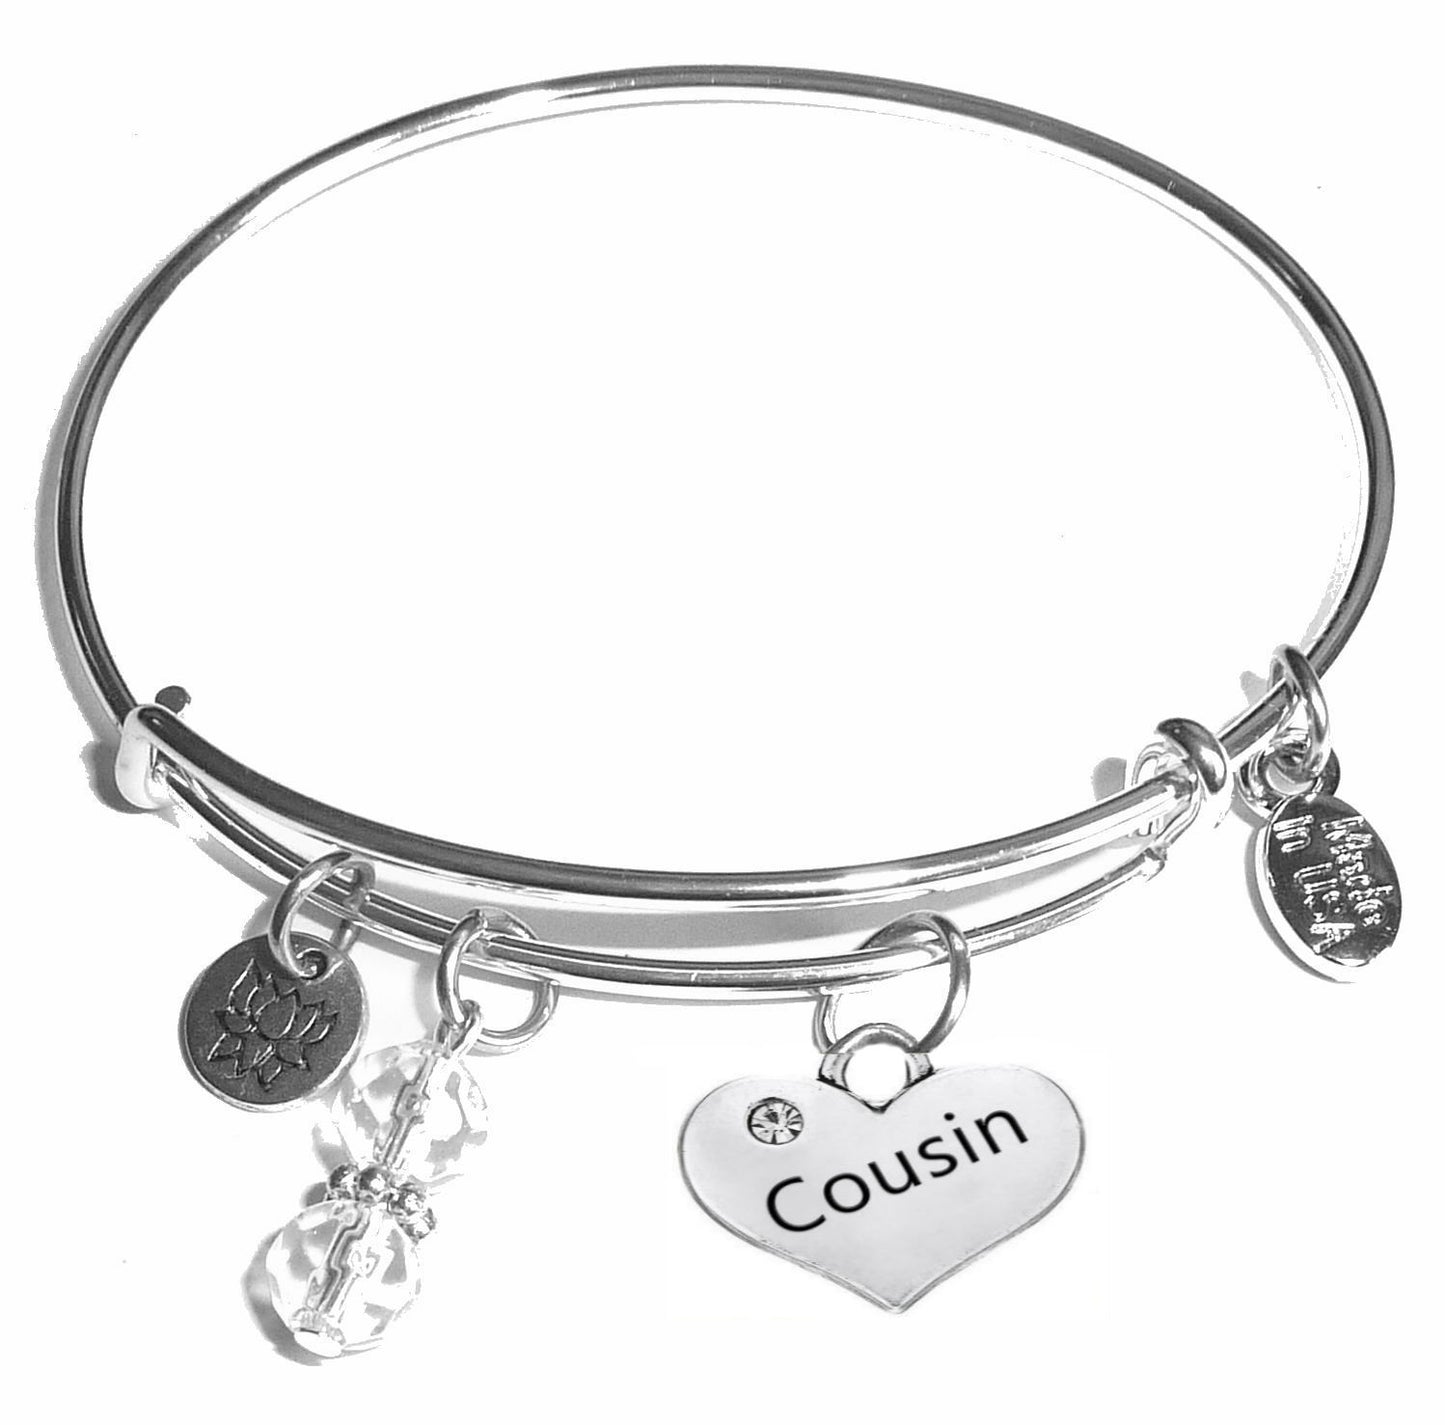 Cousin- Message Bangle Bracelet - Expandable Wire Bracelet– Comes in a gift box